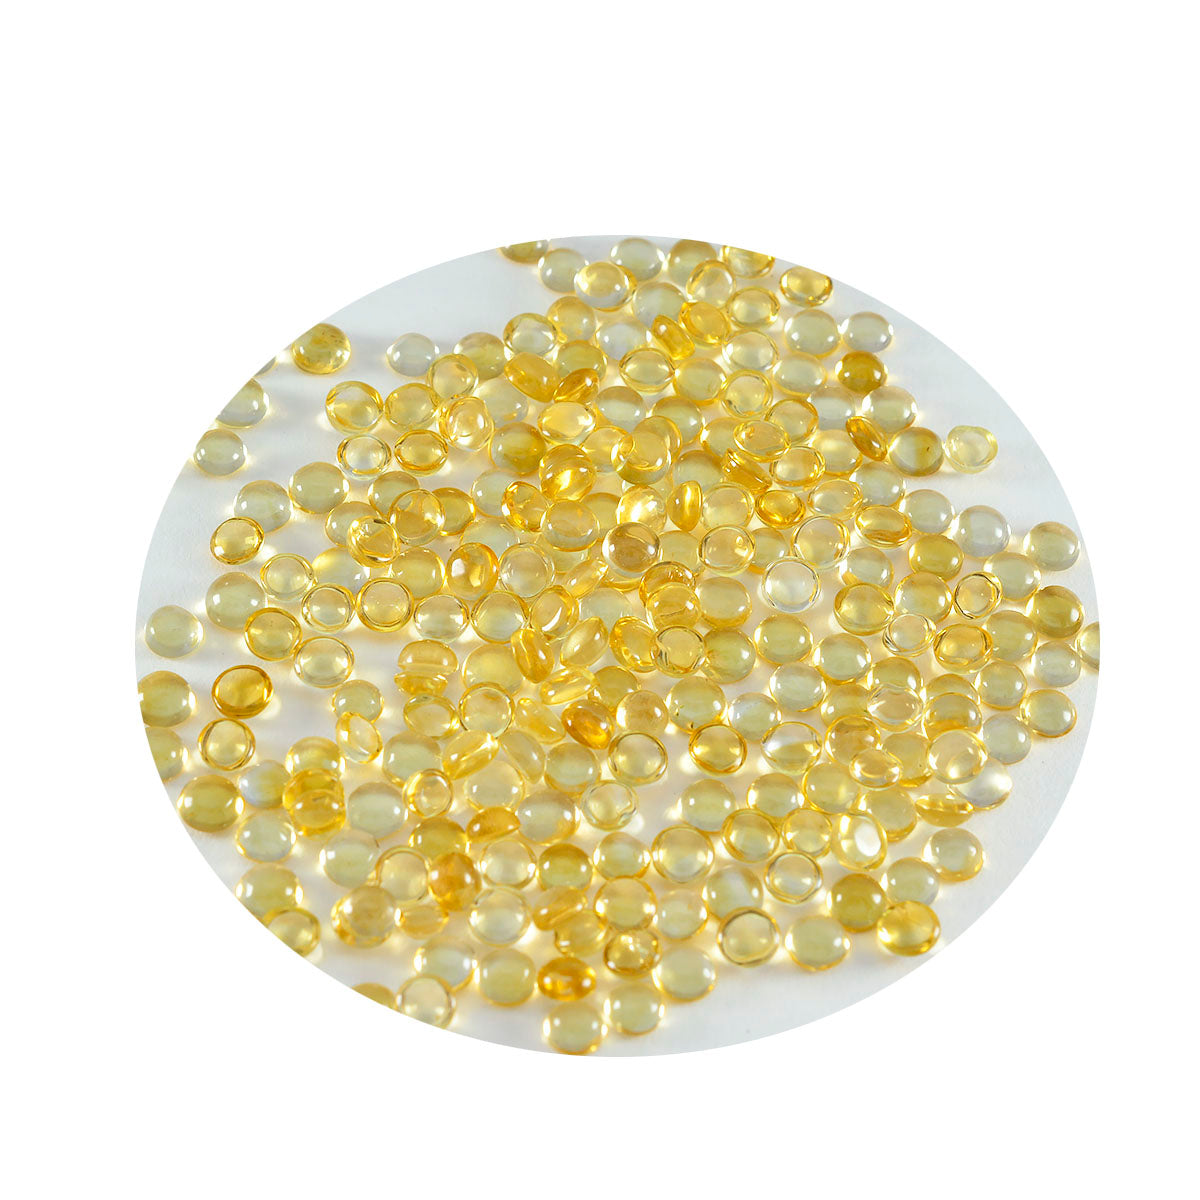 Riyogems 1PC Yellow Citrine Cabochon 3x3 mm Round Shape handsome Quality Loose Gemstone